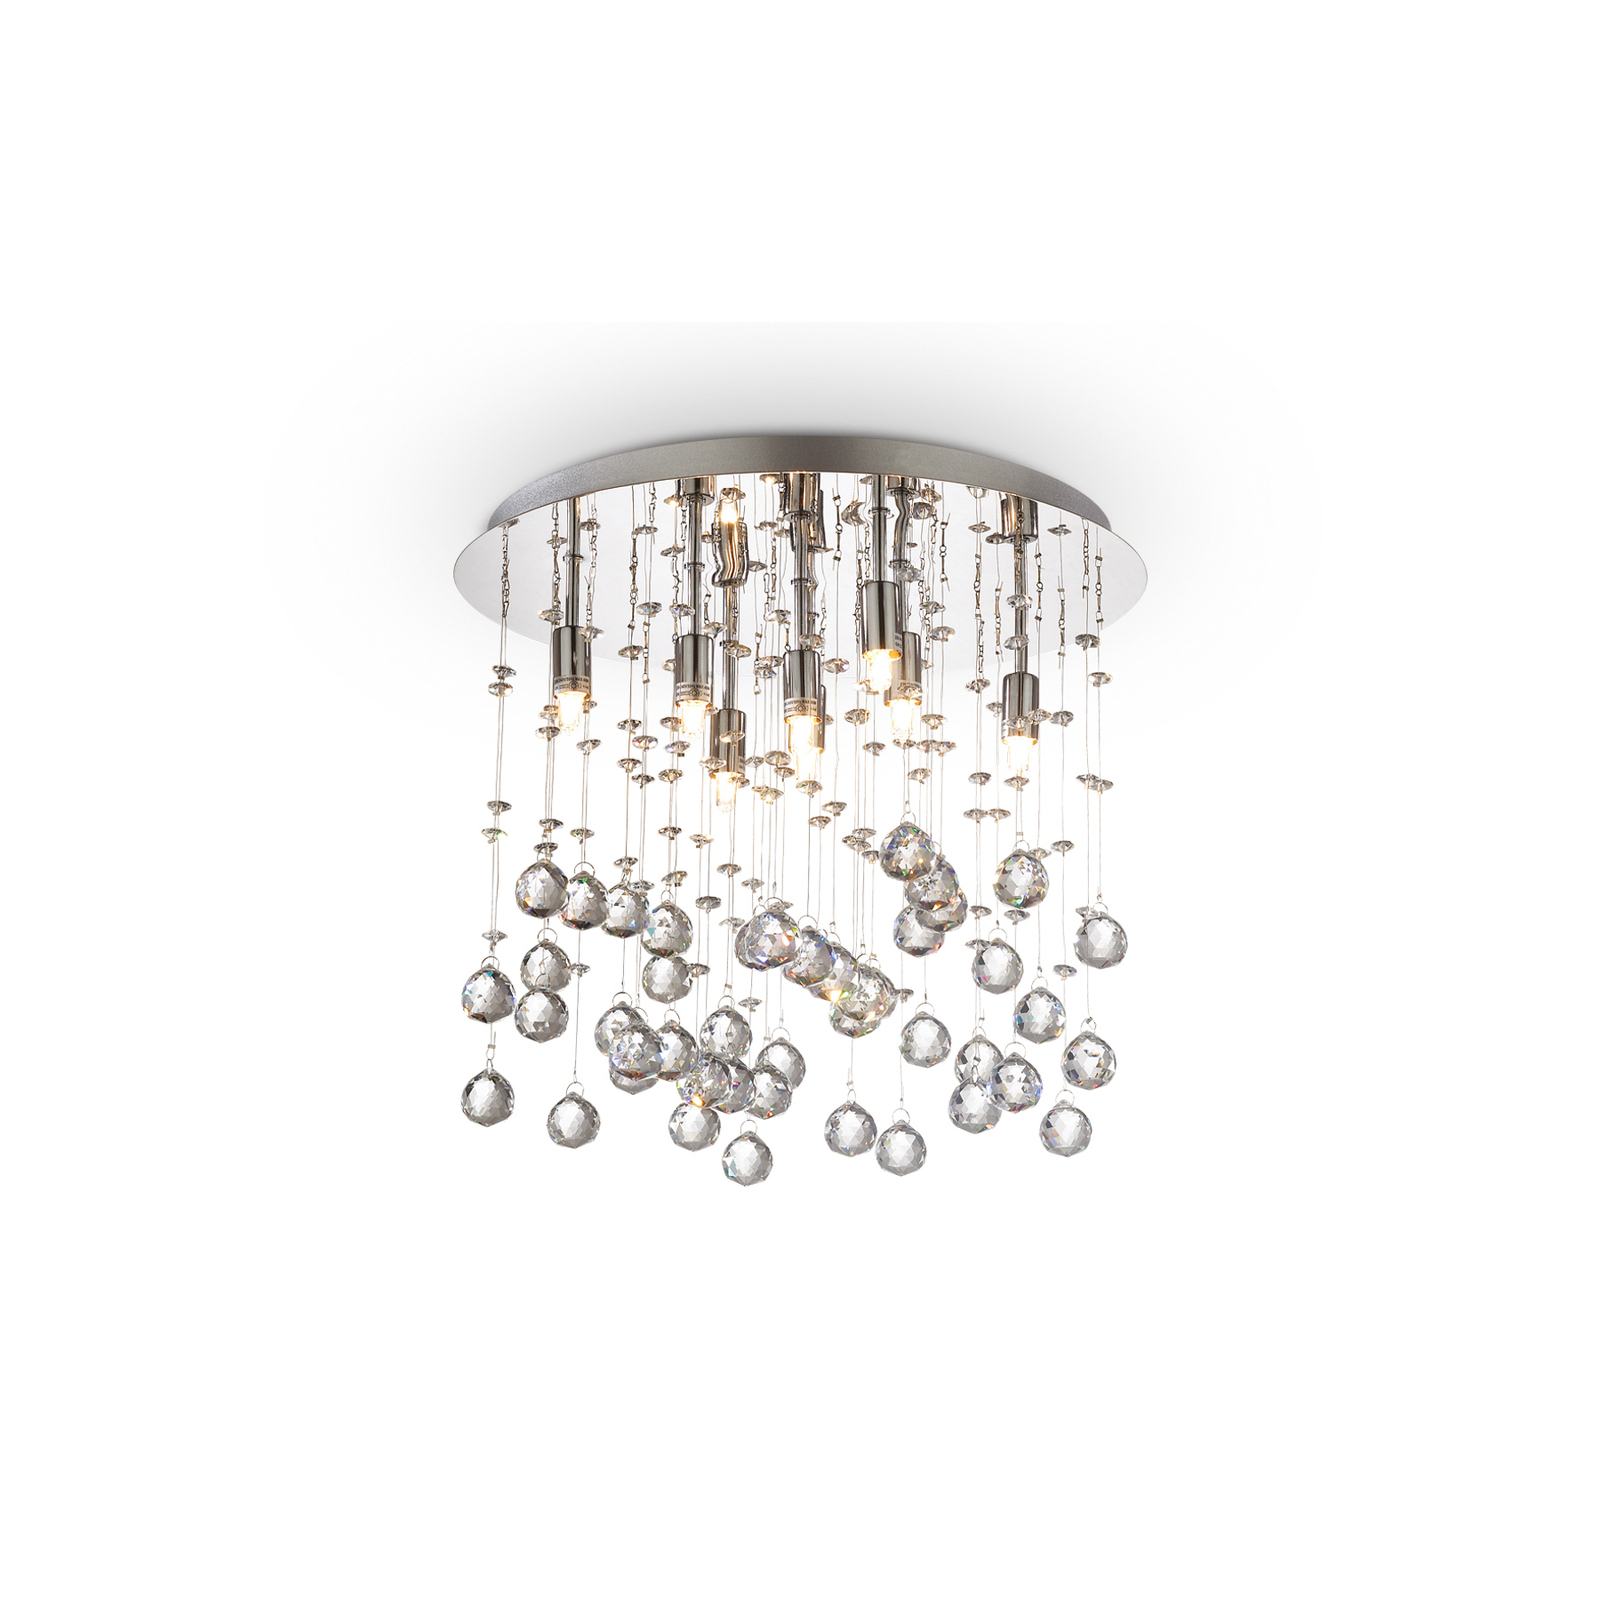 Ideal Lux plafondlamp Moonlight chroom metaal kristal 8-lamps.